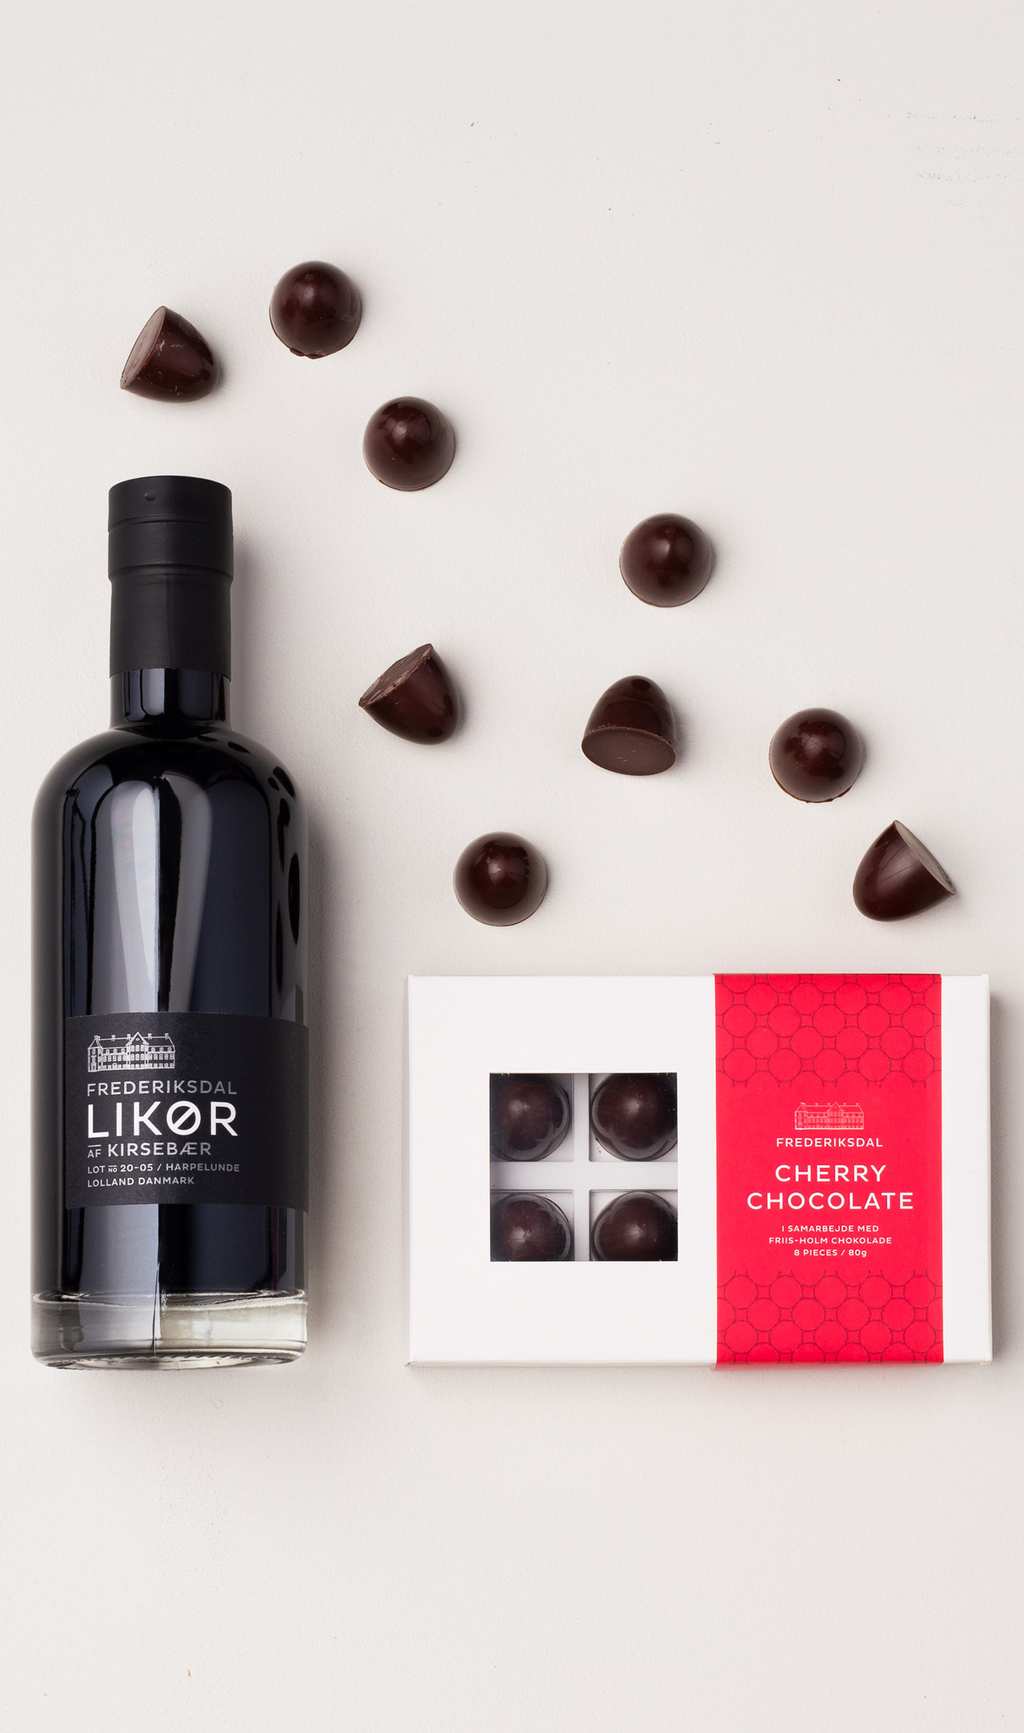 Frederiksdal Likør og Cherry Chocolate